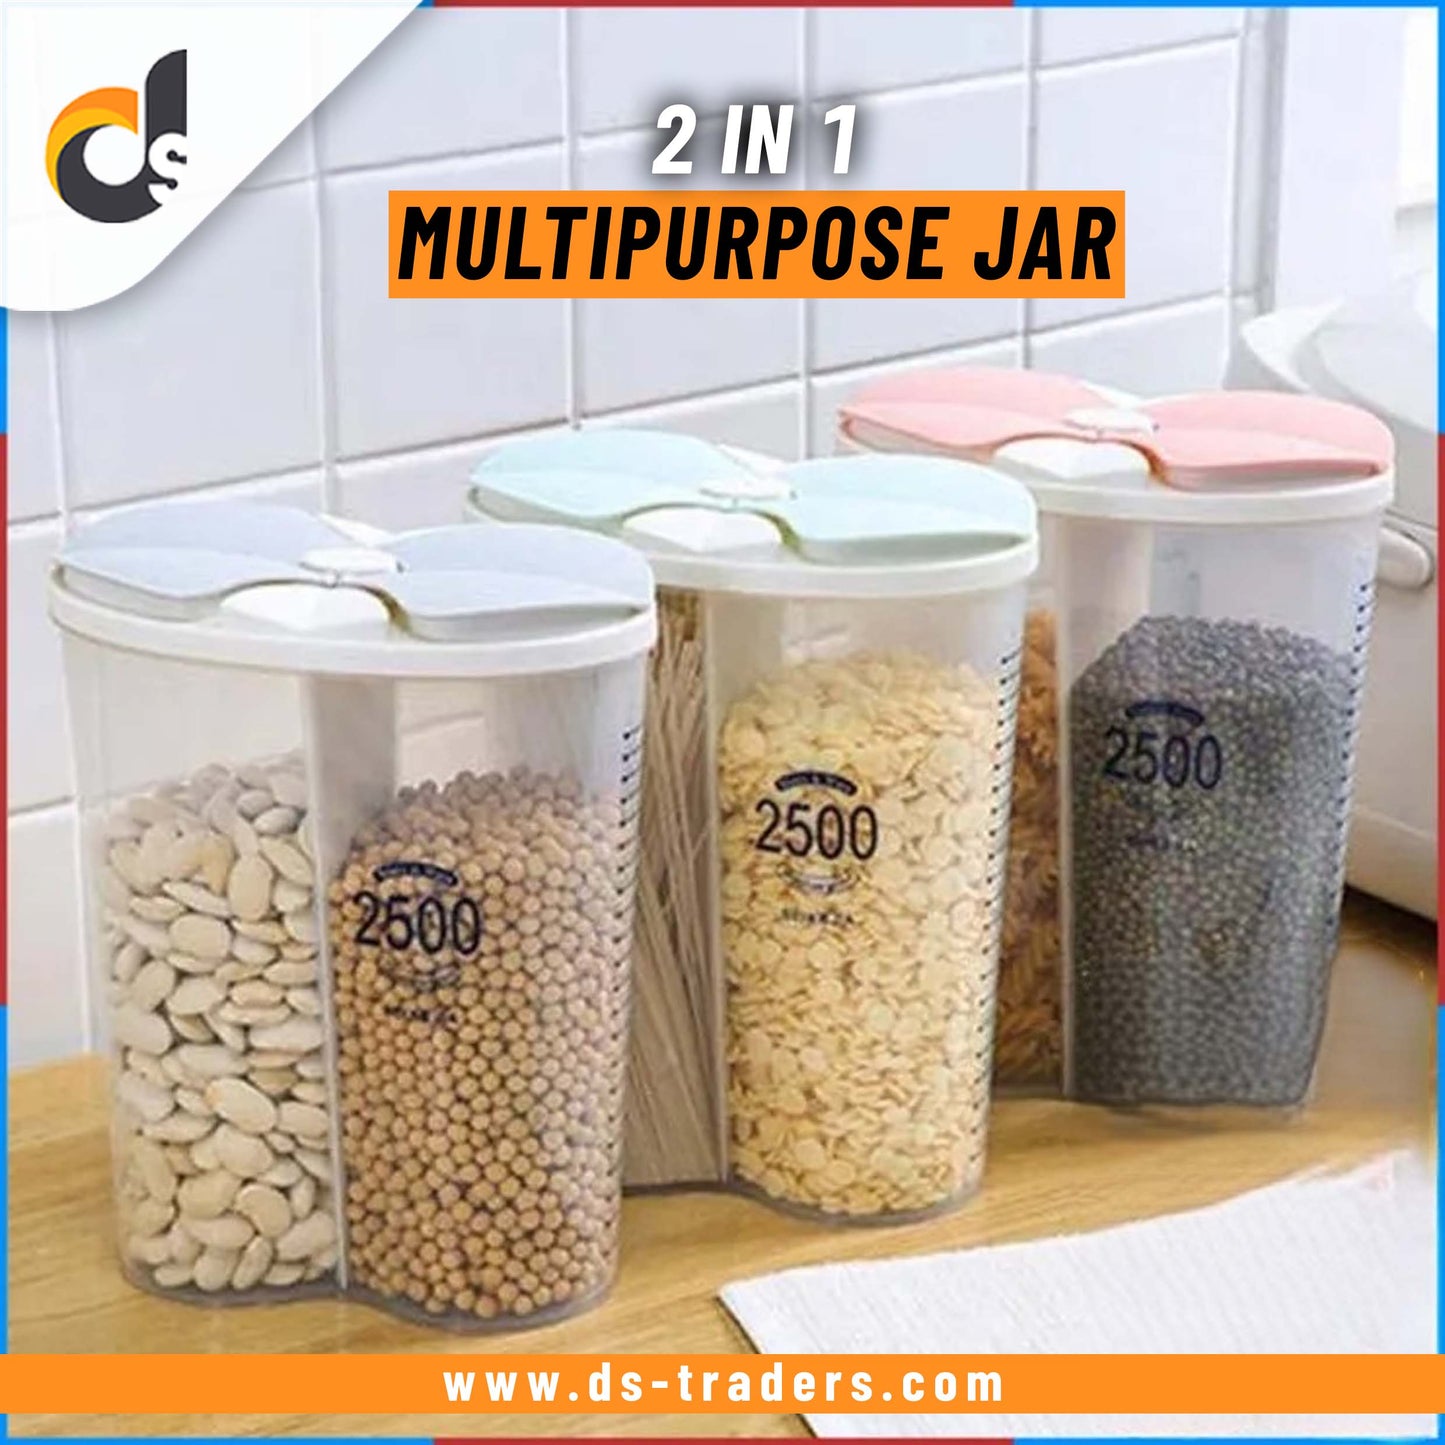 2 in 1 Multipurpose Jar